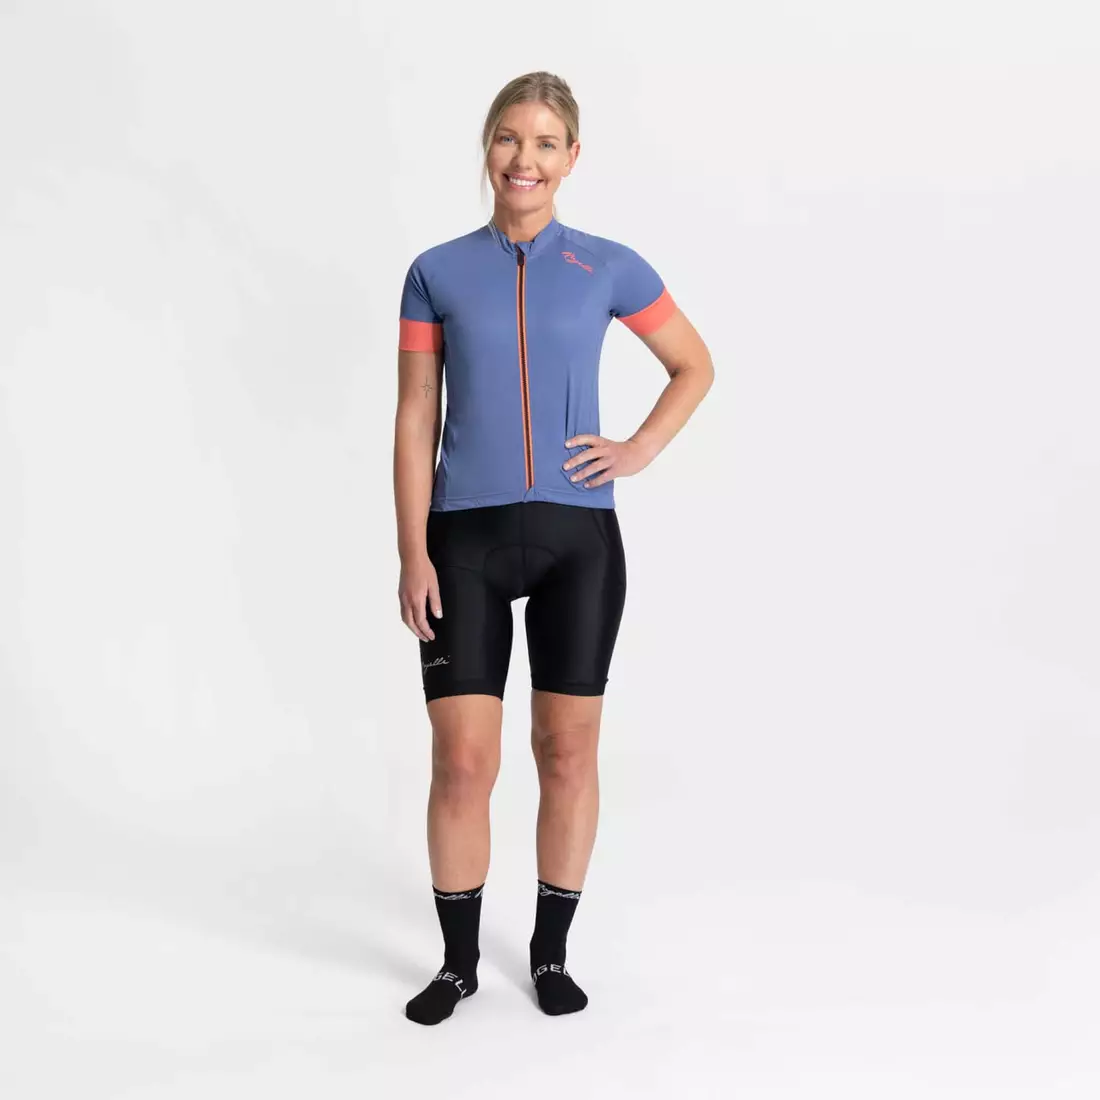 Rogelli MODESTA women's cycling jersey, blue-coral